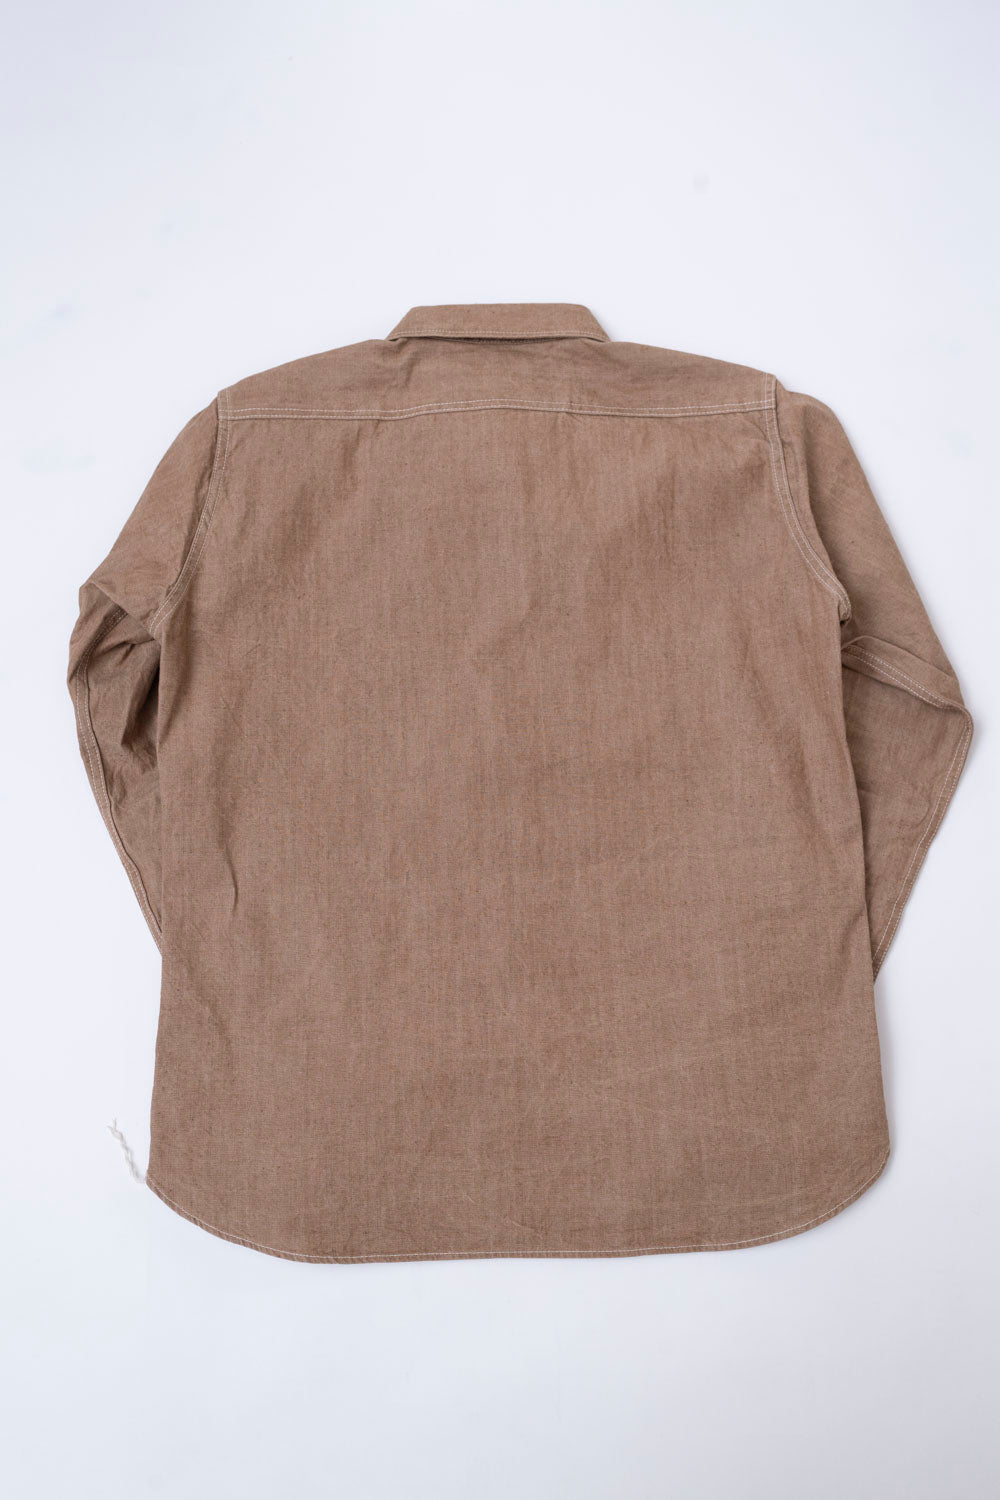 IHSH-363-MOC - 10oz Organic Chambray Work Shirt - Mocha